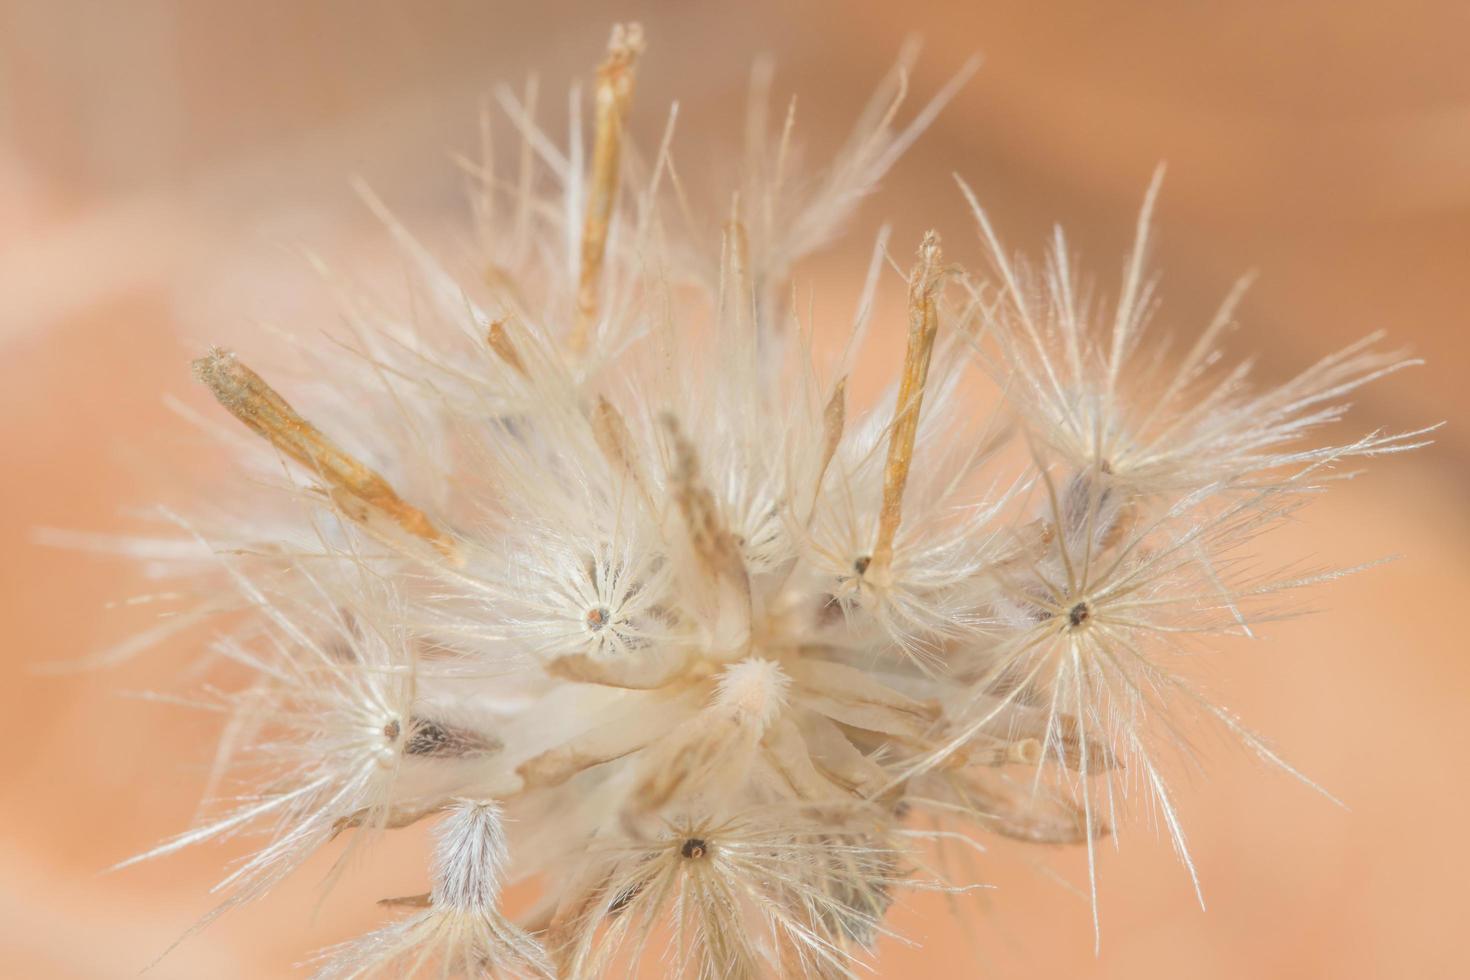 Wildflower, close-up photo